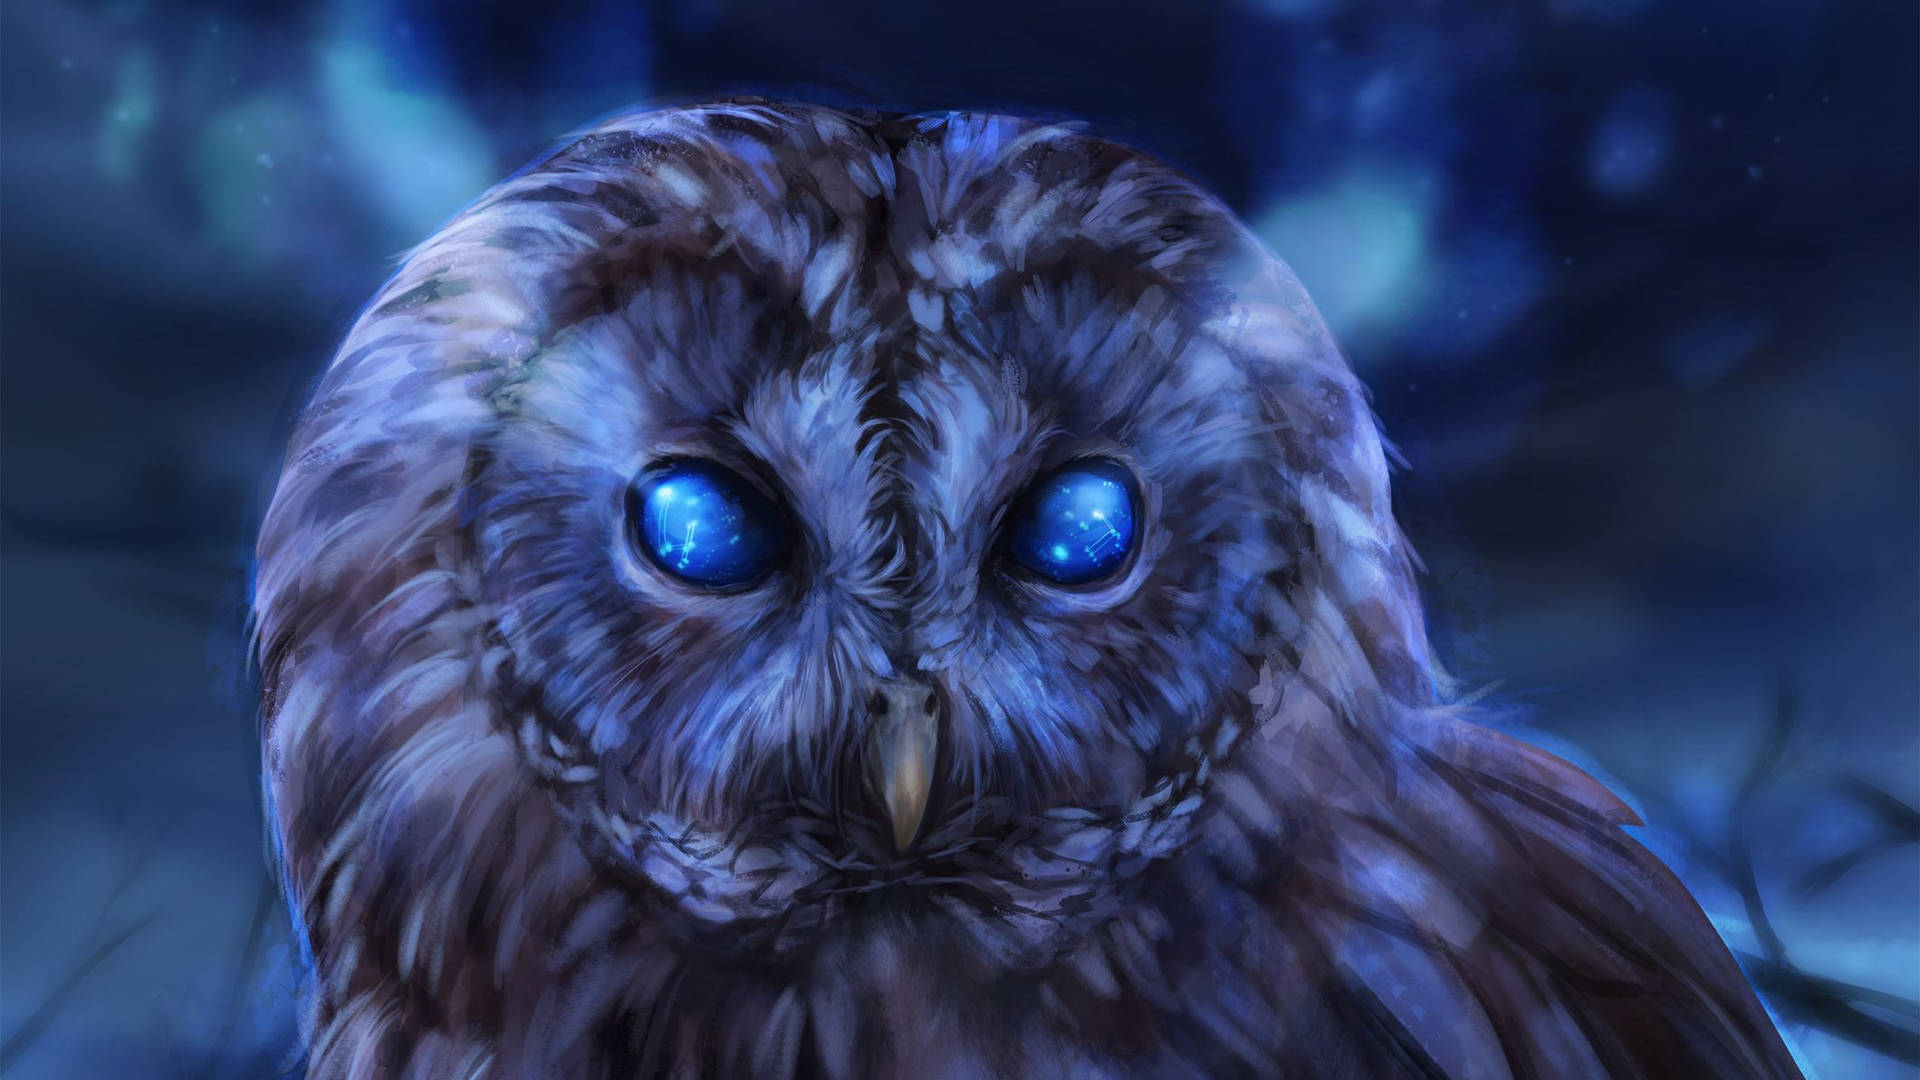 Blue Owl Magical Eyes Wallpaper